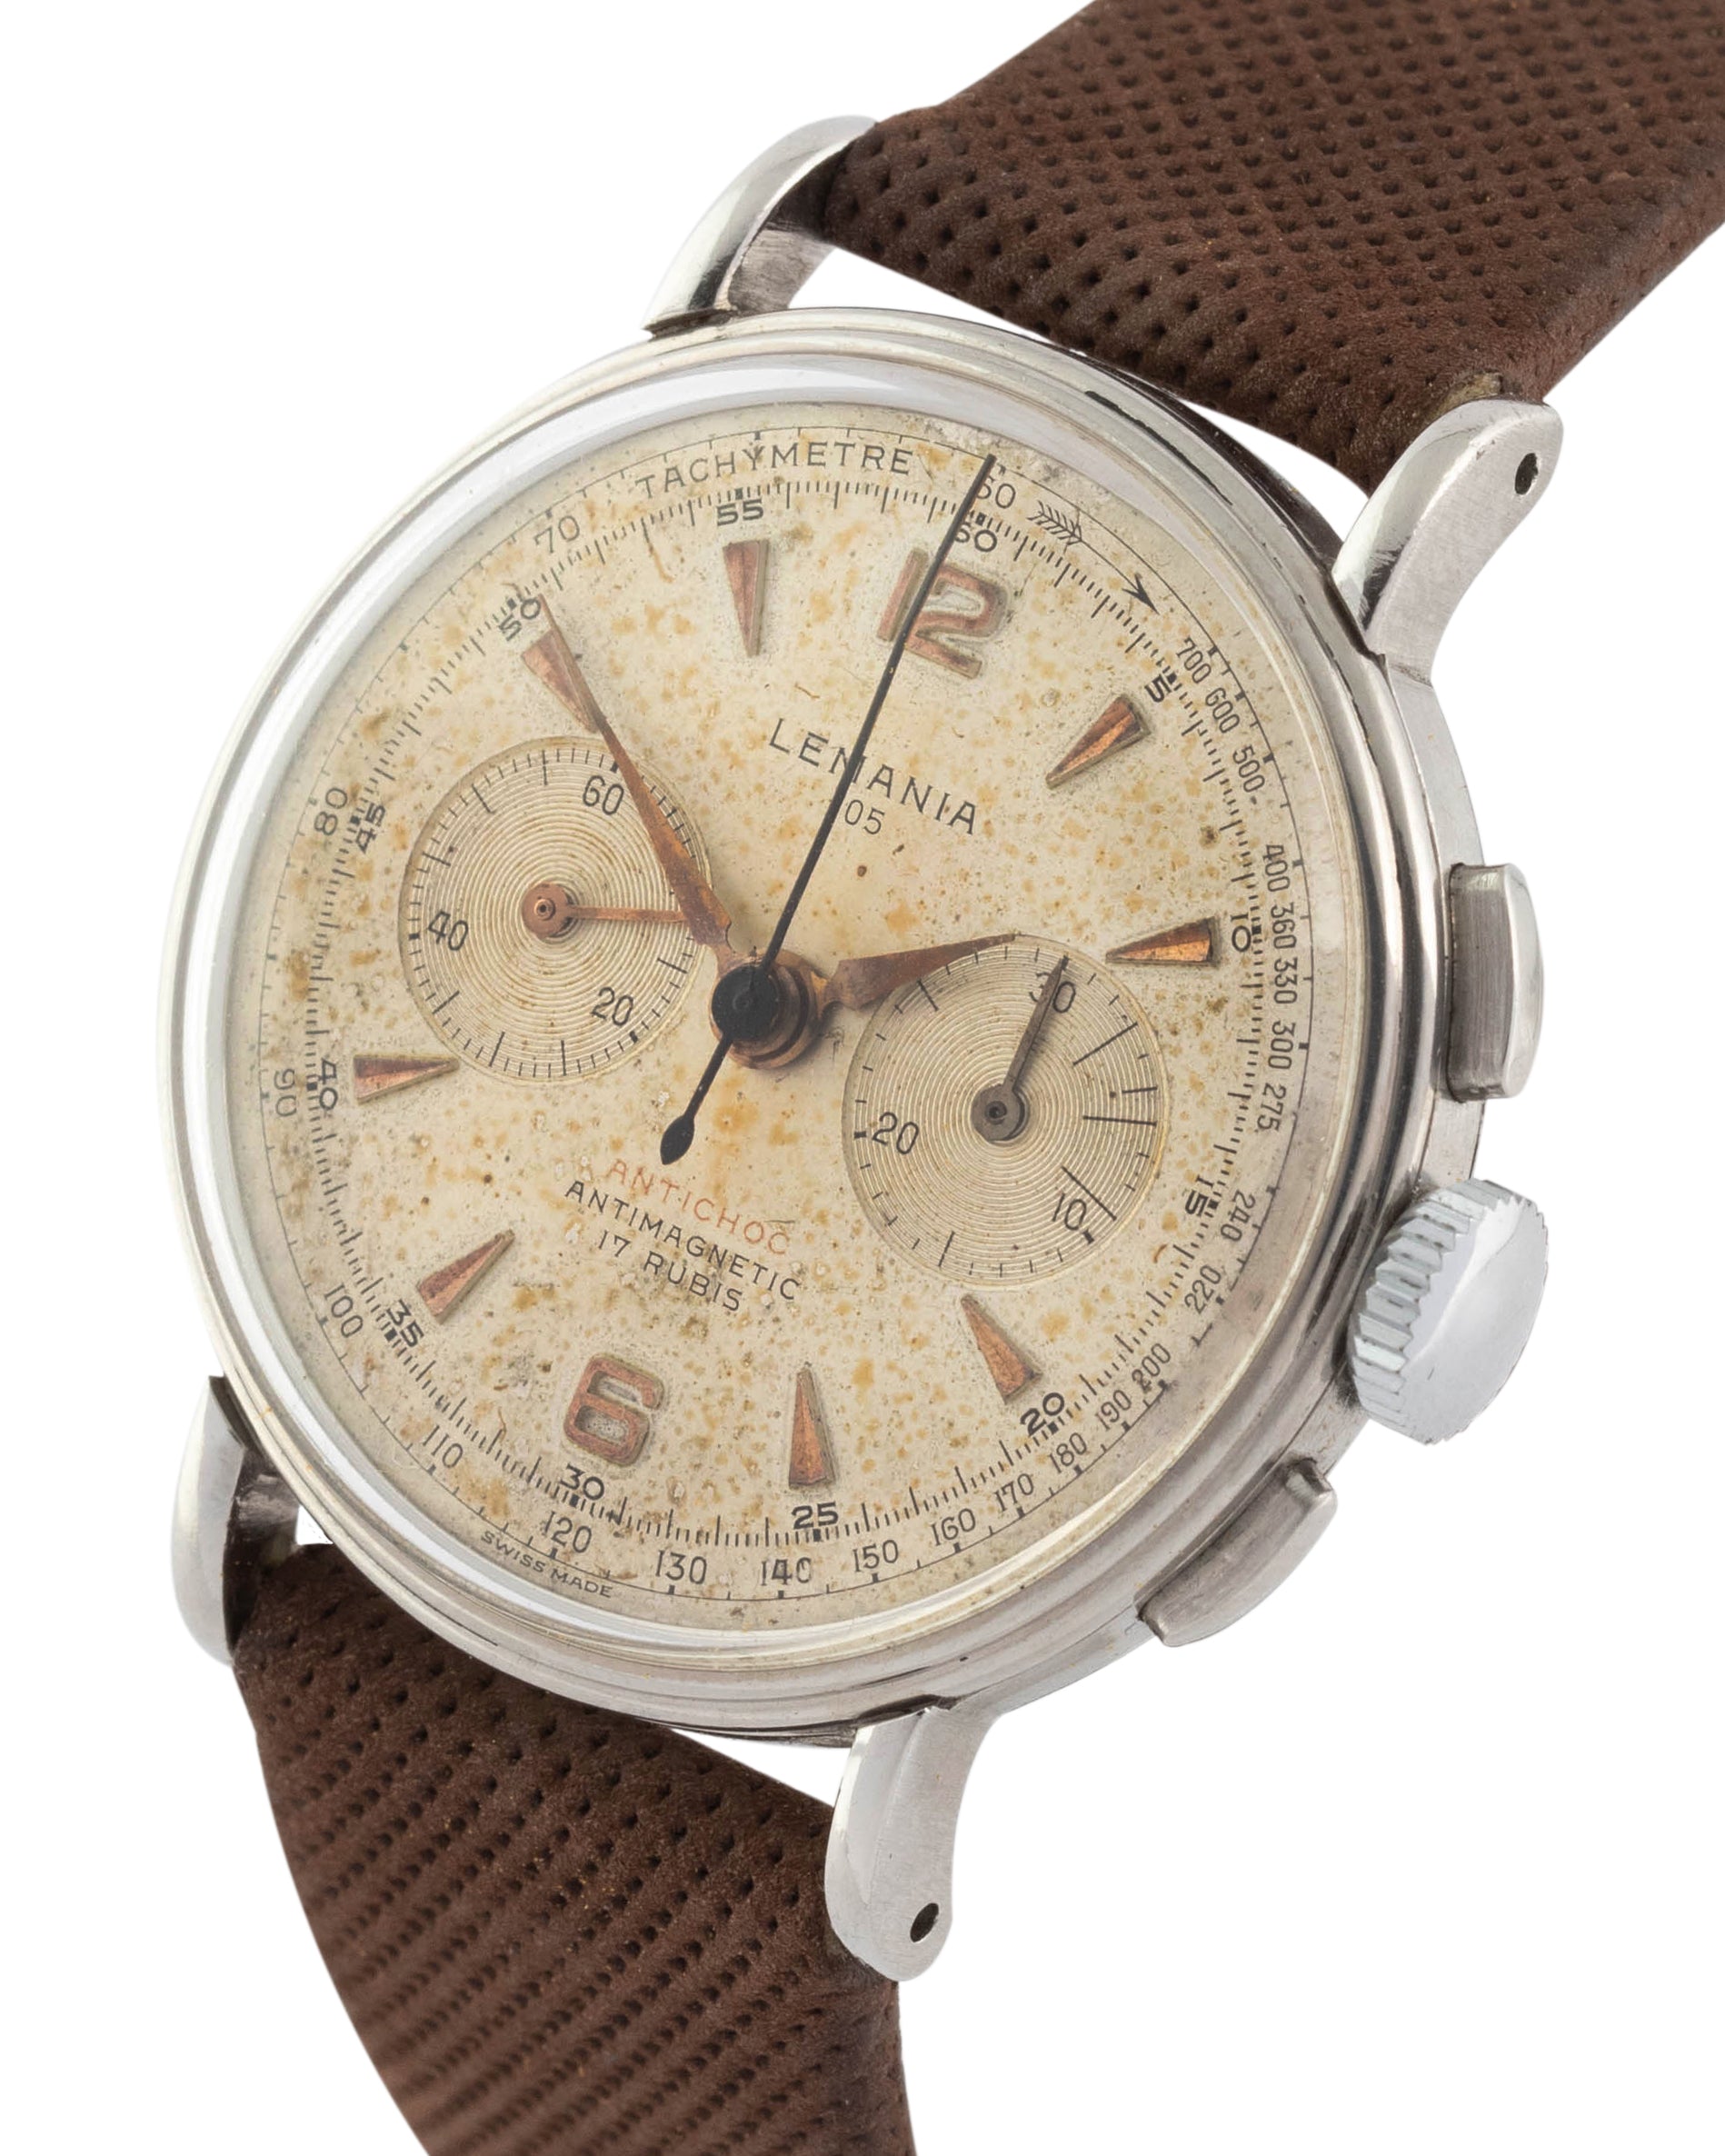 Lemania Chronograph "105 Antichoc" wrist watch 